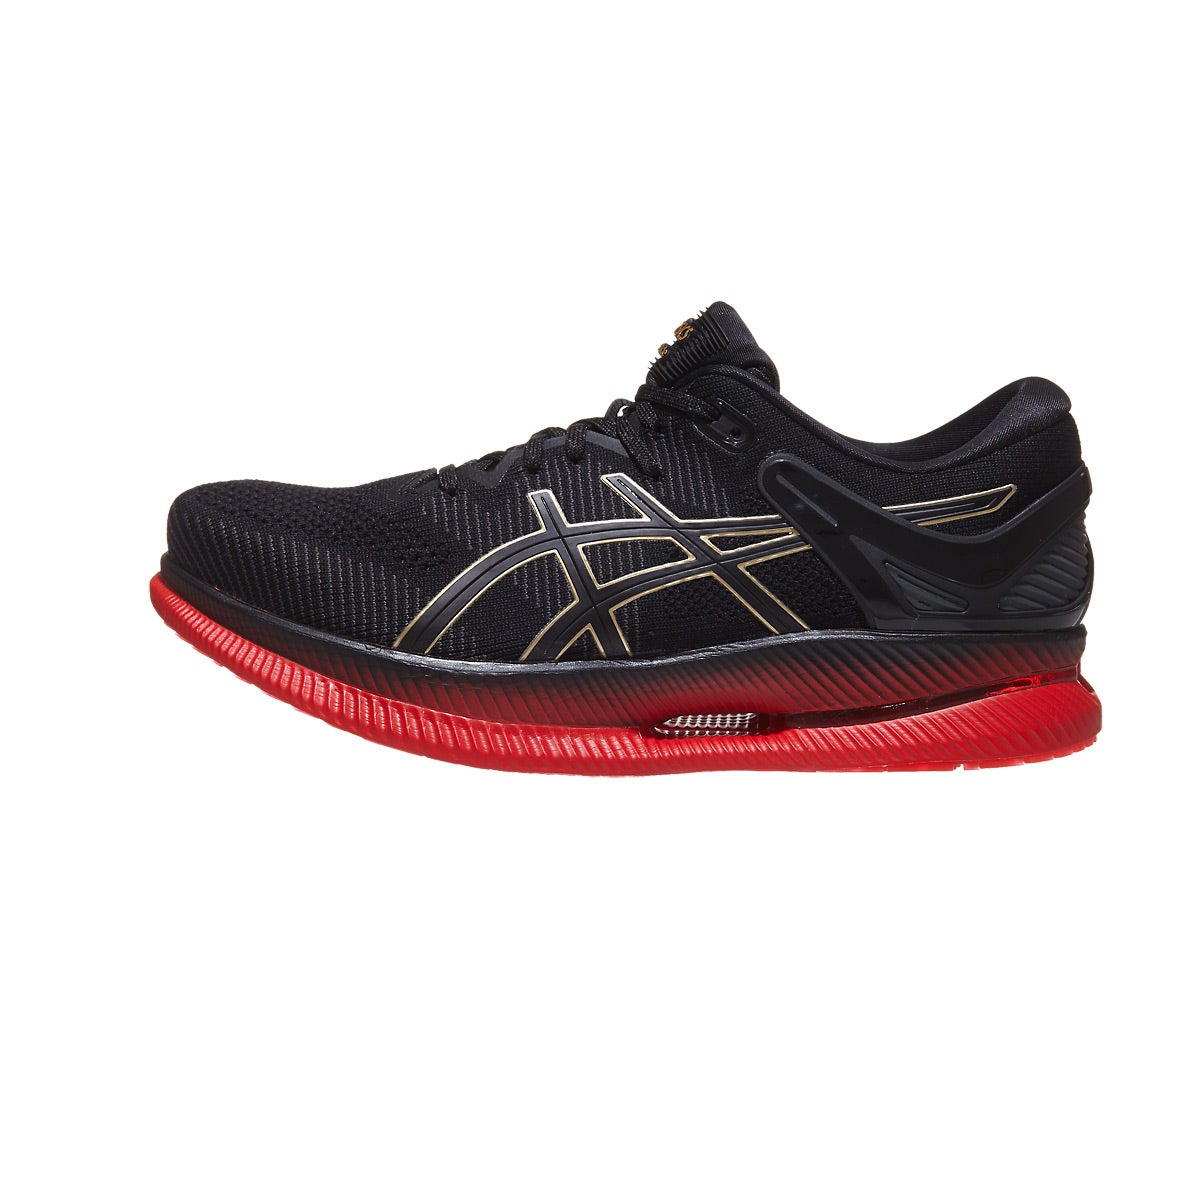 ASICS MetaRide Women's Shoes Black/Classic Red 360° View | Running ...